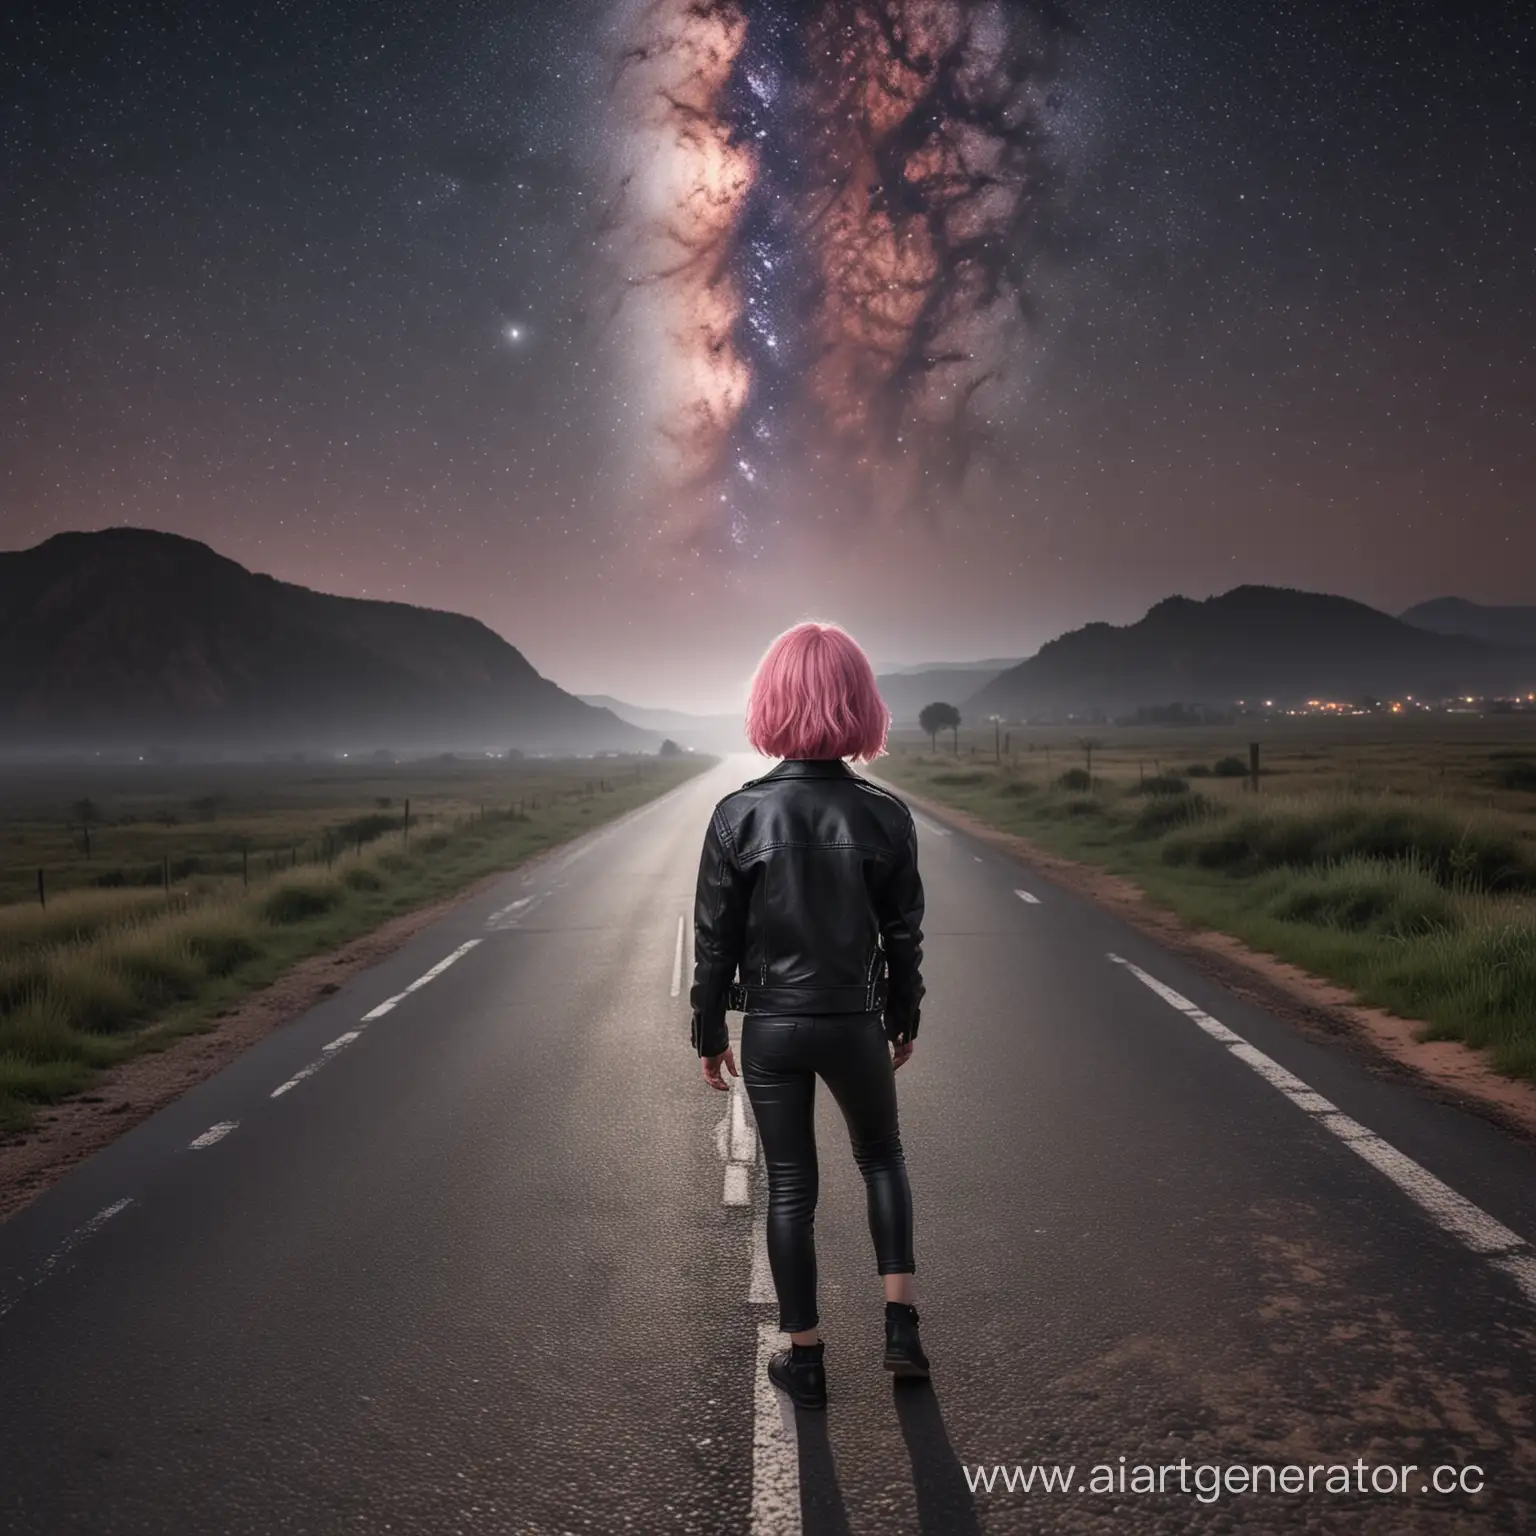 Girl-with-Pink-Hair-Walking-in-Dark-Night-Town-under-Milky-Way